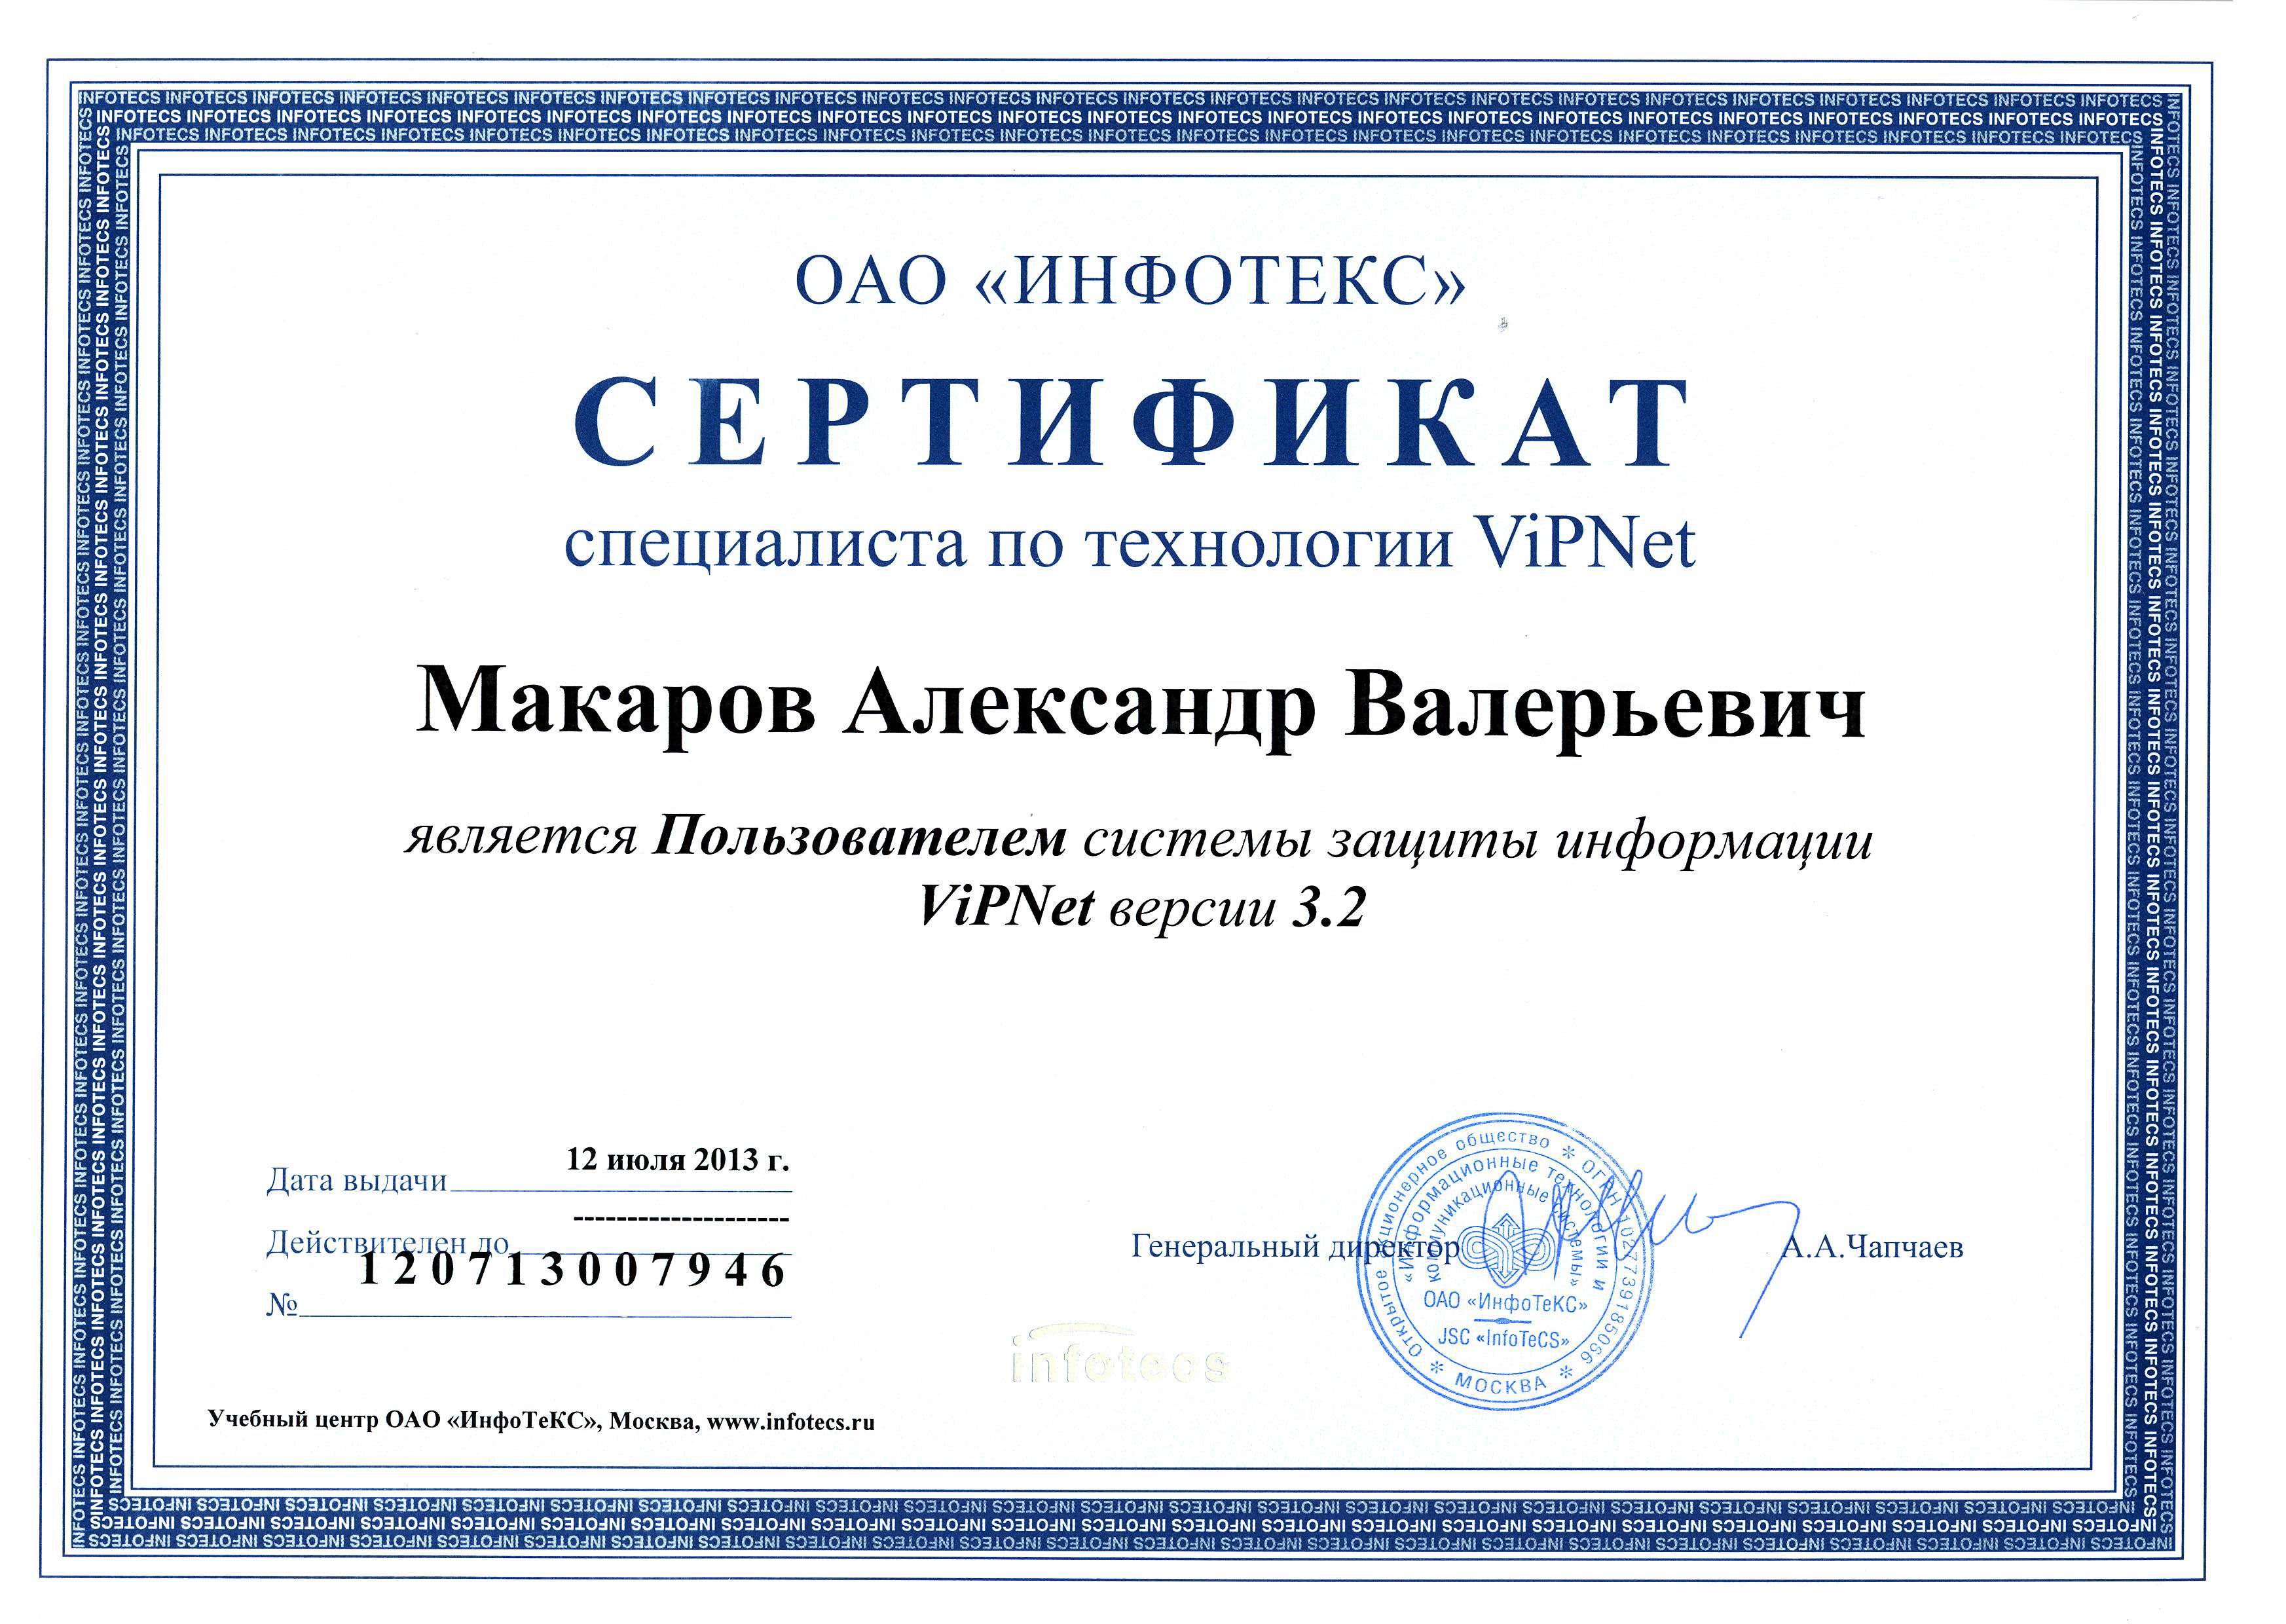 Vipnet client сертификат. Сертификат VIPNET. Сертификат по информационной безопасности. Сертификат специалиста VIPNET. Международные сертификаты информационной безопасности.